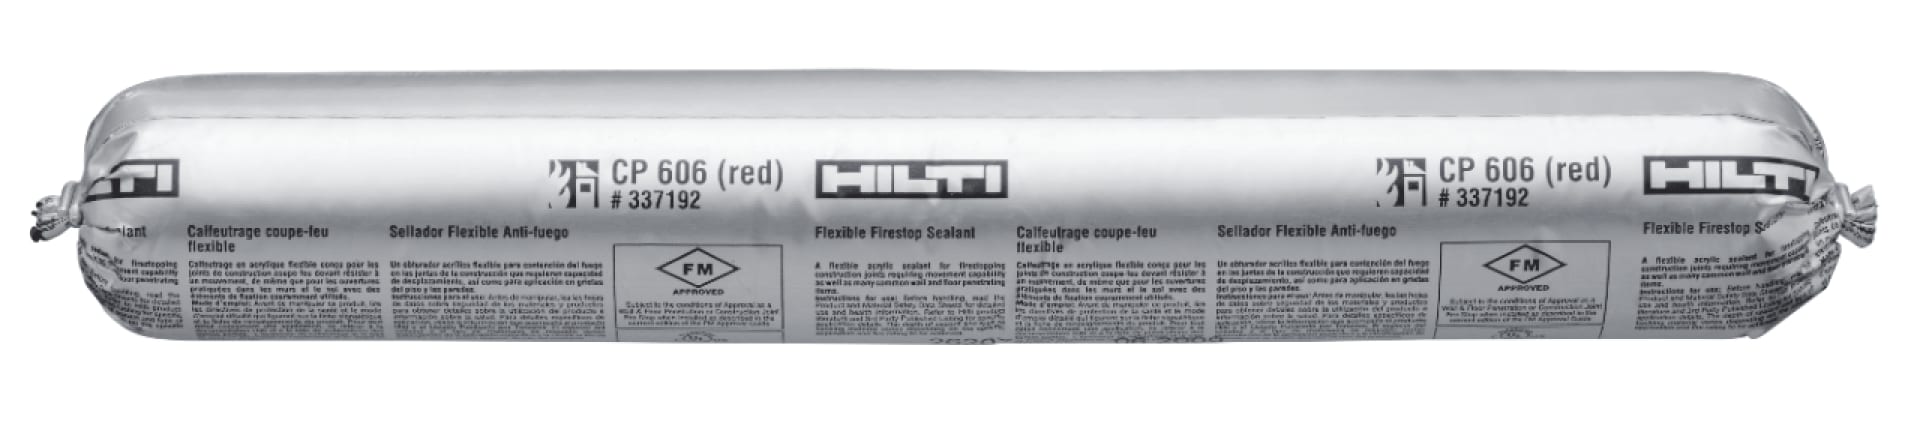 Hilti flexible firestop sealants CP 606